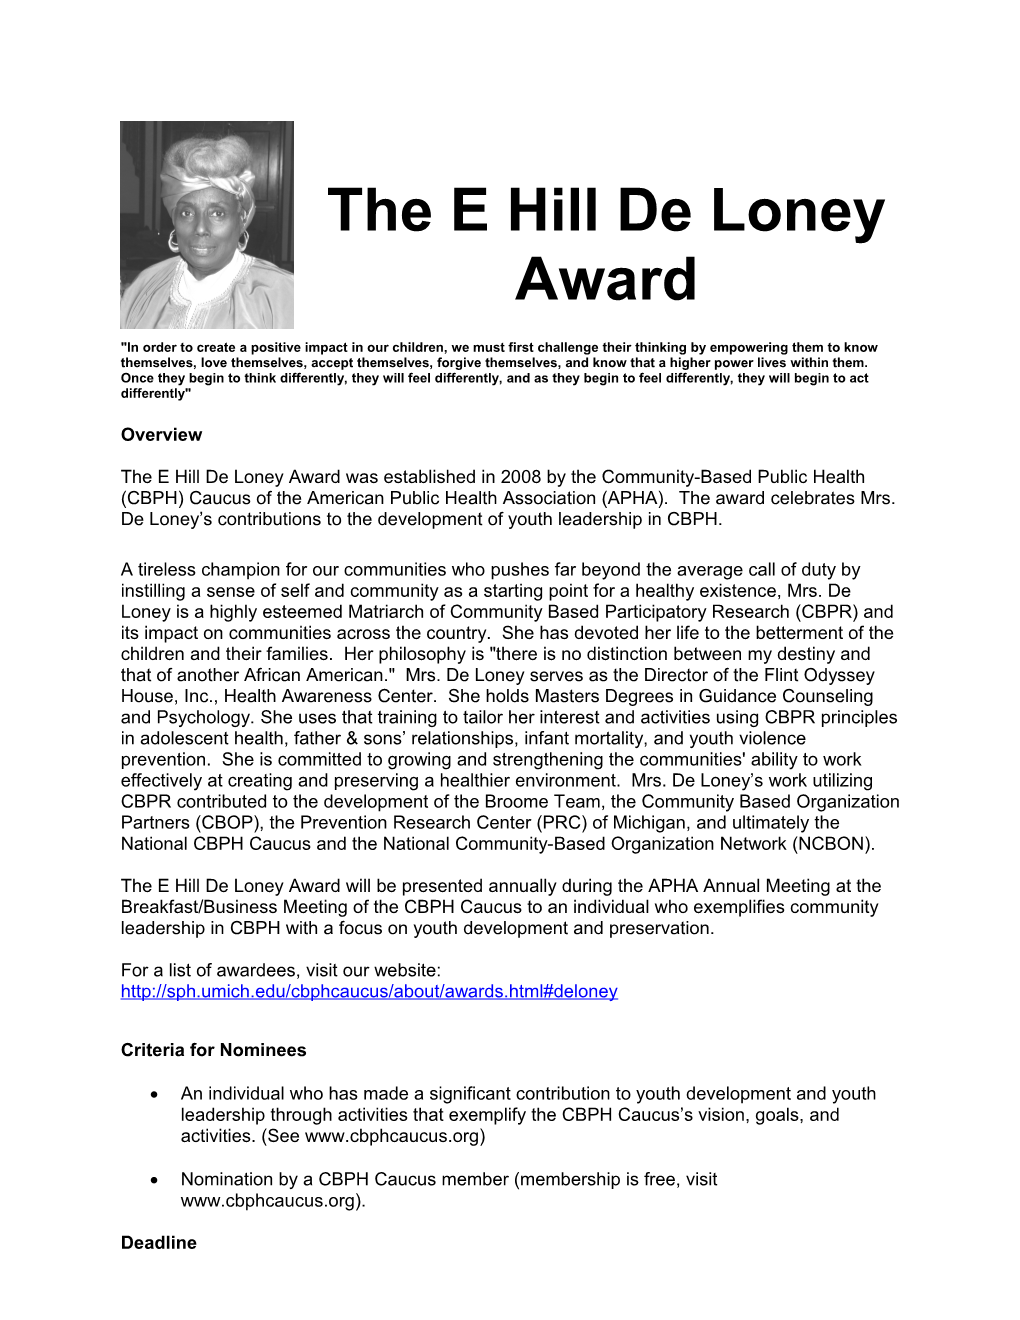 The E Hill De Loney Award